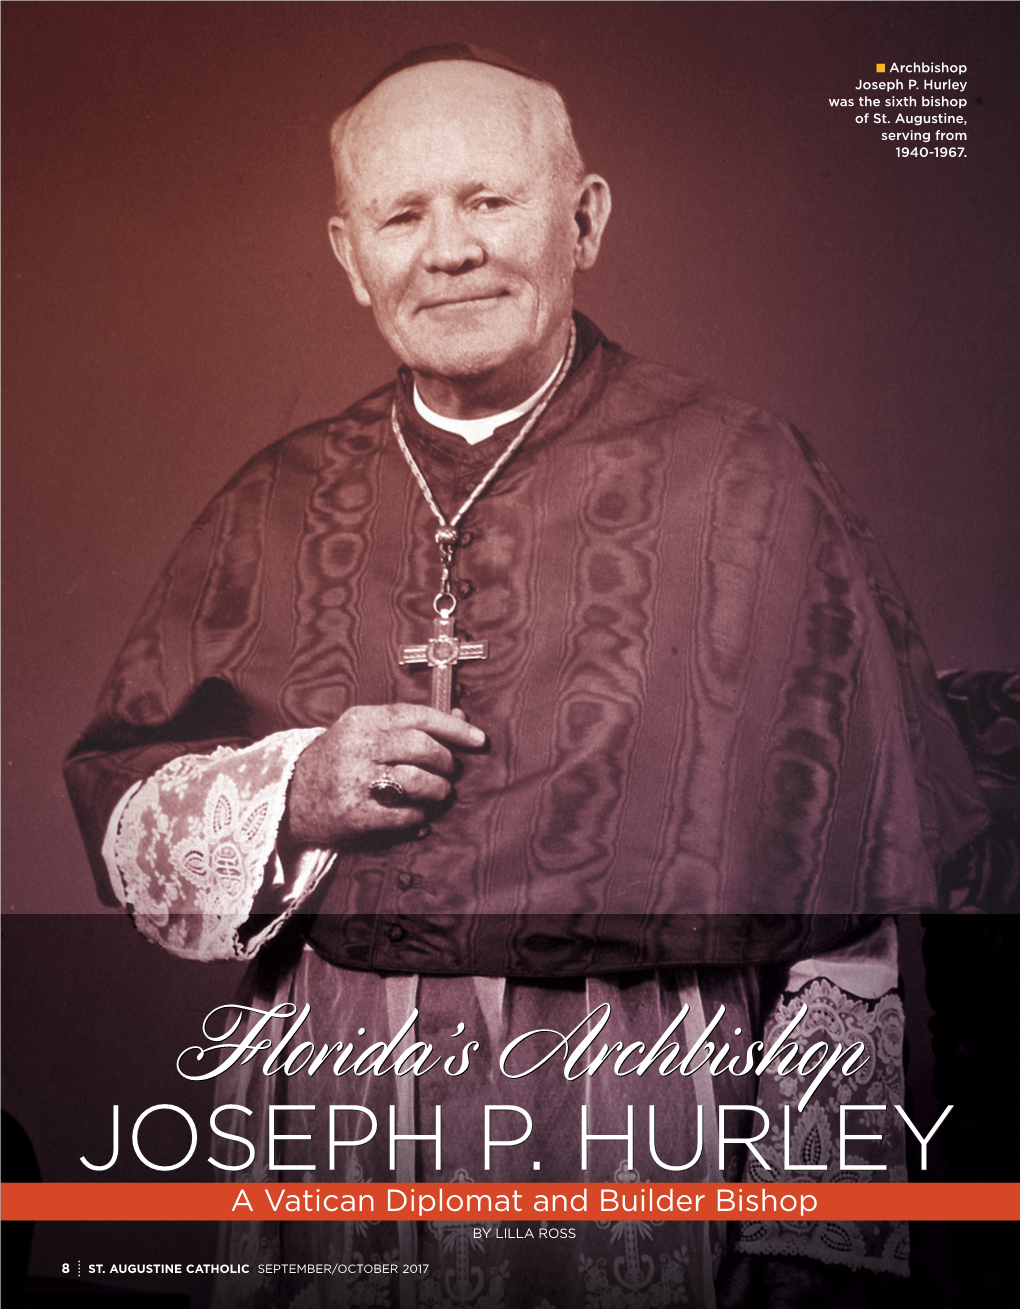 Floridas-Archbishop-Joseph-P.-Hurley.Pdf